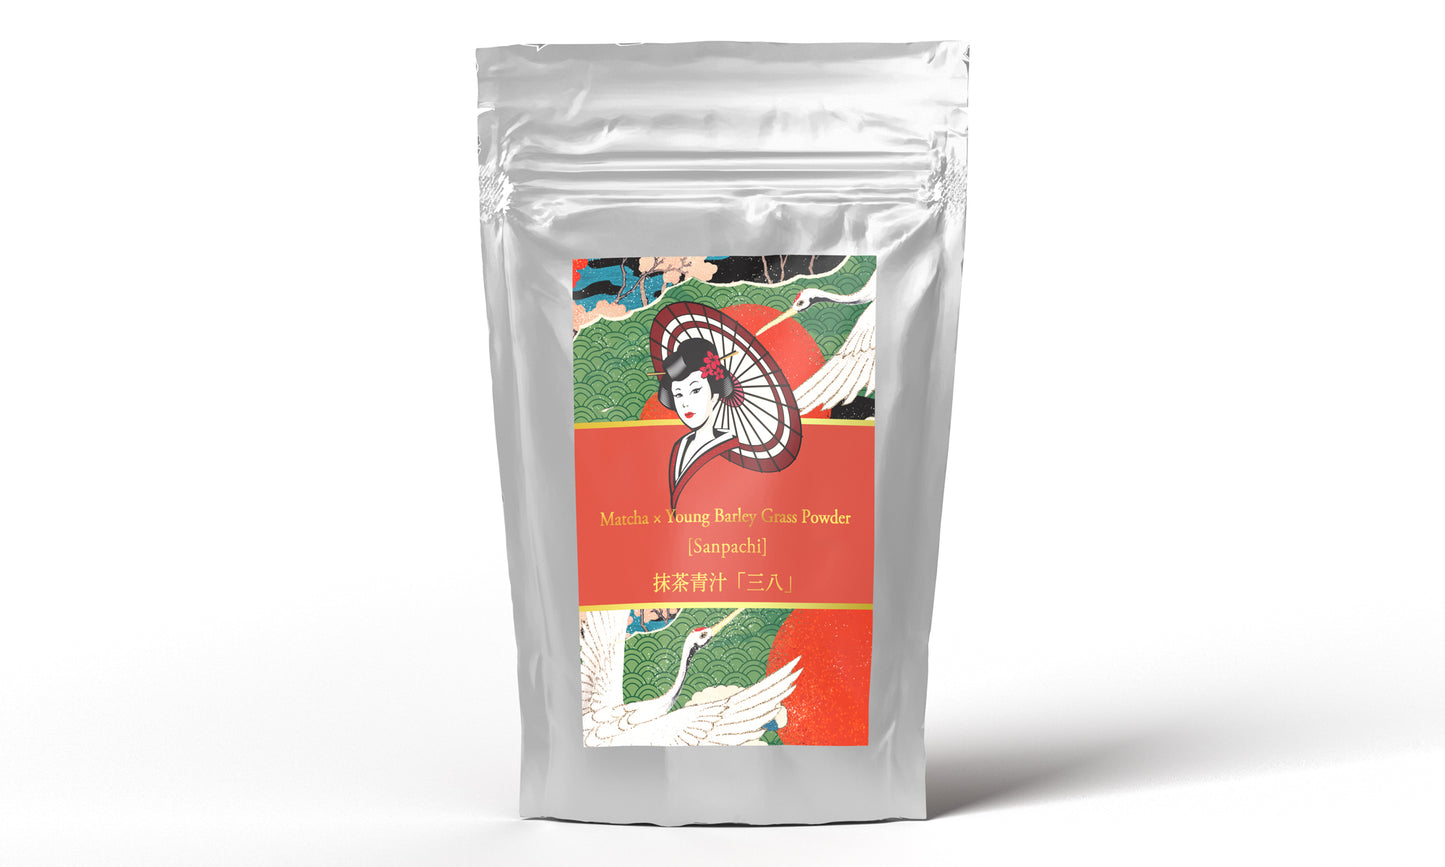 [Sanpachi Aojiru] Matcha x Young Barley Grass Powder Individual Packets 国産 九州産 個包装 [天然 青汁] カテキン カフェイン 食物繊維 ビタミン カルシウム ミネラル 鉄分 保存料 着色料 香料 無添加 三八  向抹茶（むこうまっちゃ）Mukoh Matcha